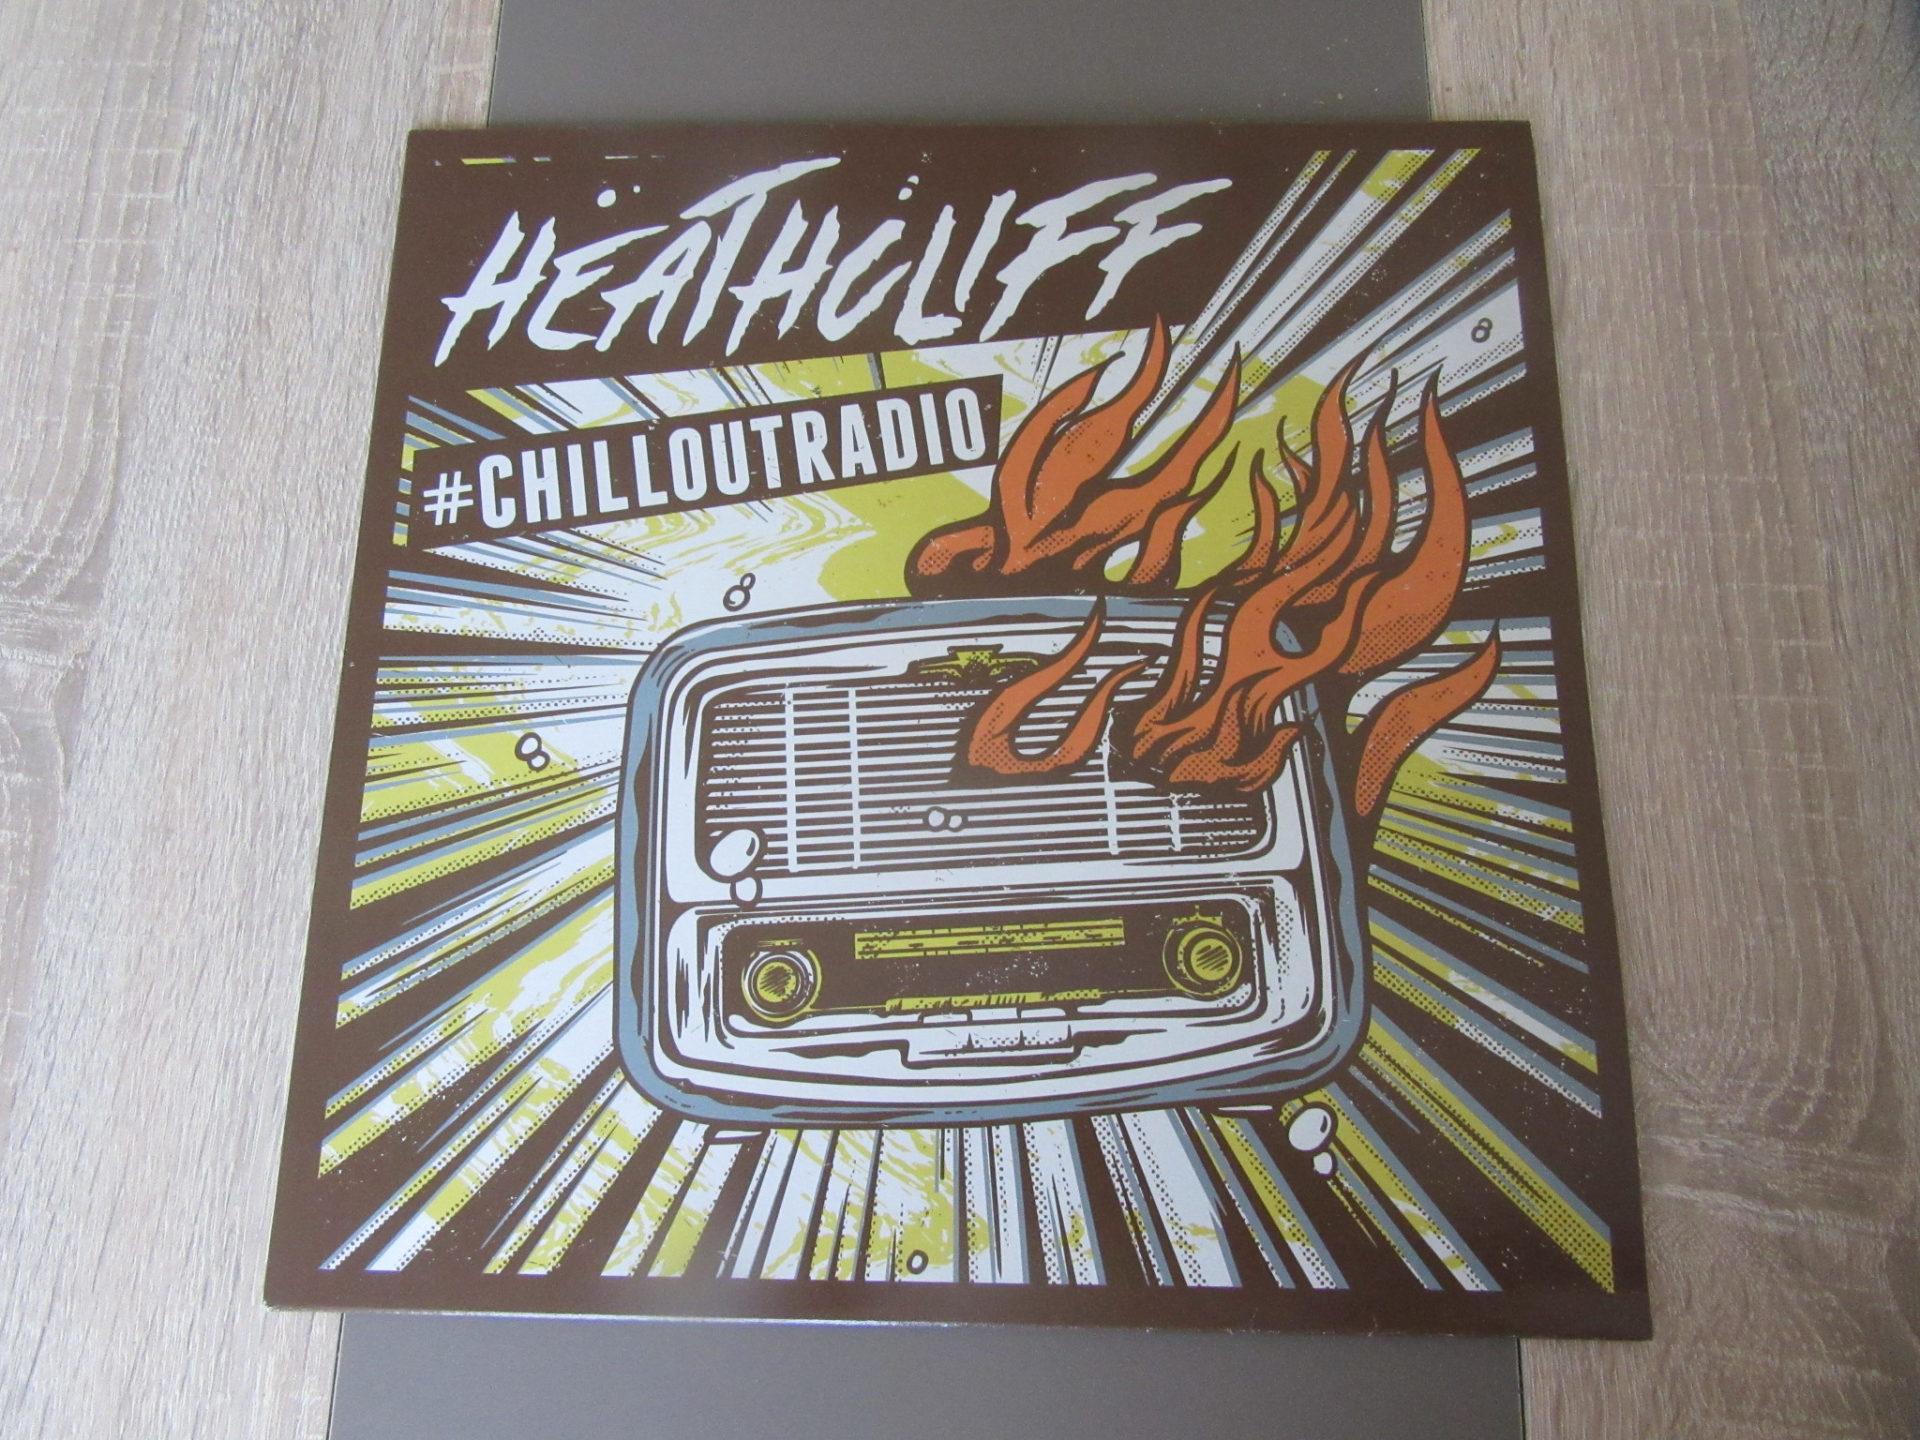 Heathcliff - "Chillout Radio" col. Vinyl-LP 12